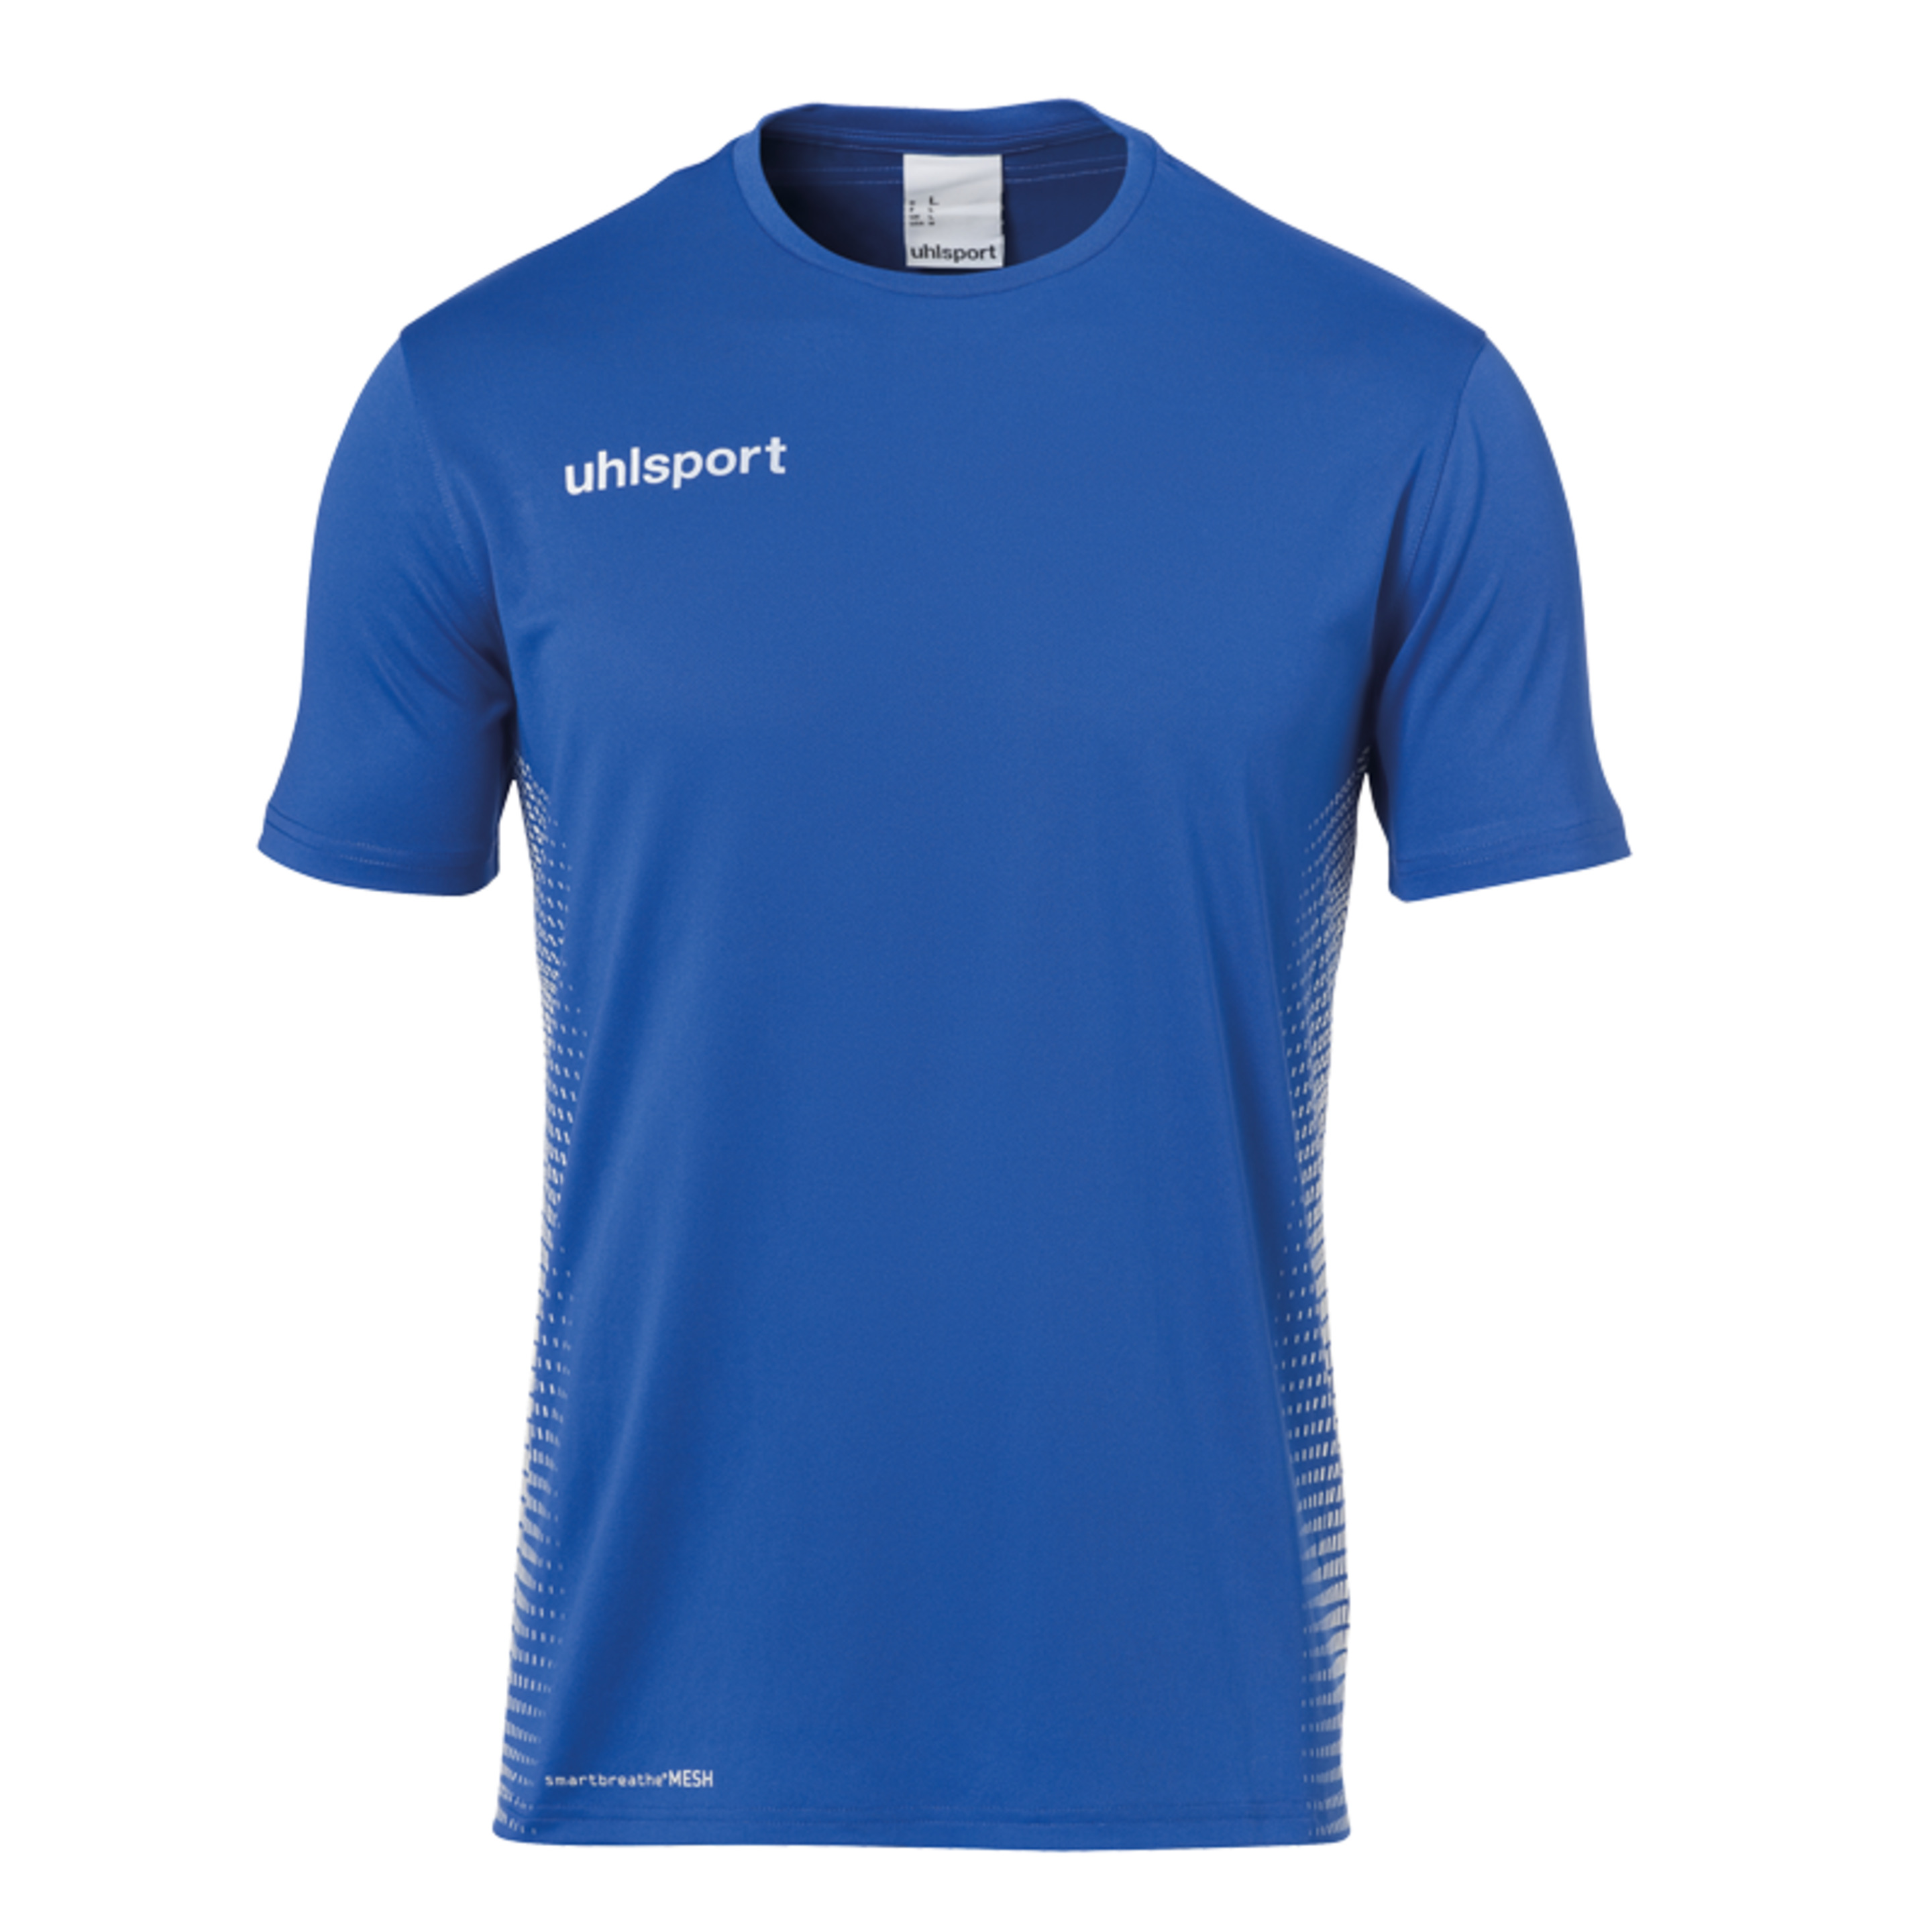 Score Kit Ss Azur/blanco Uhlsport